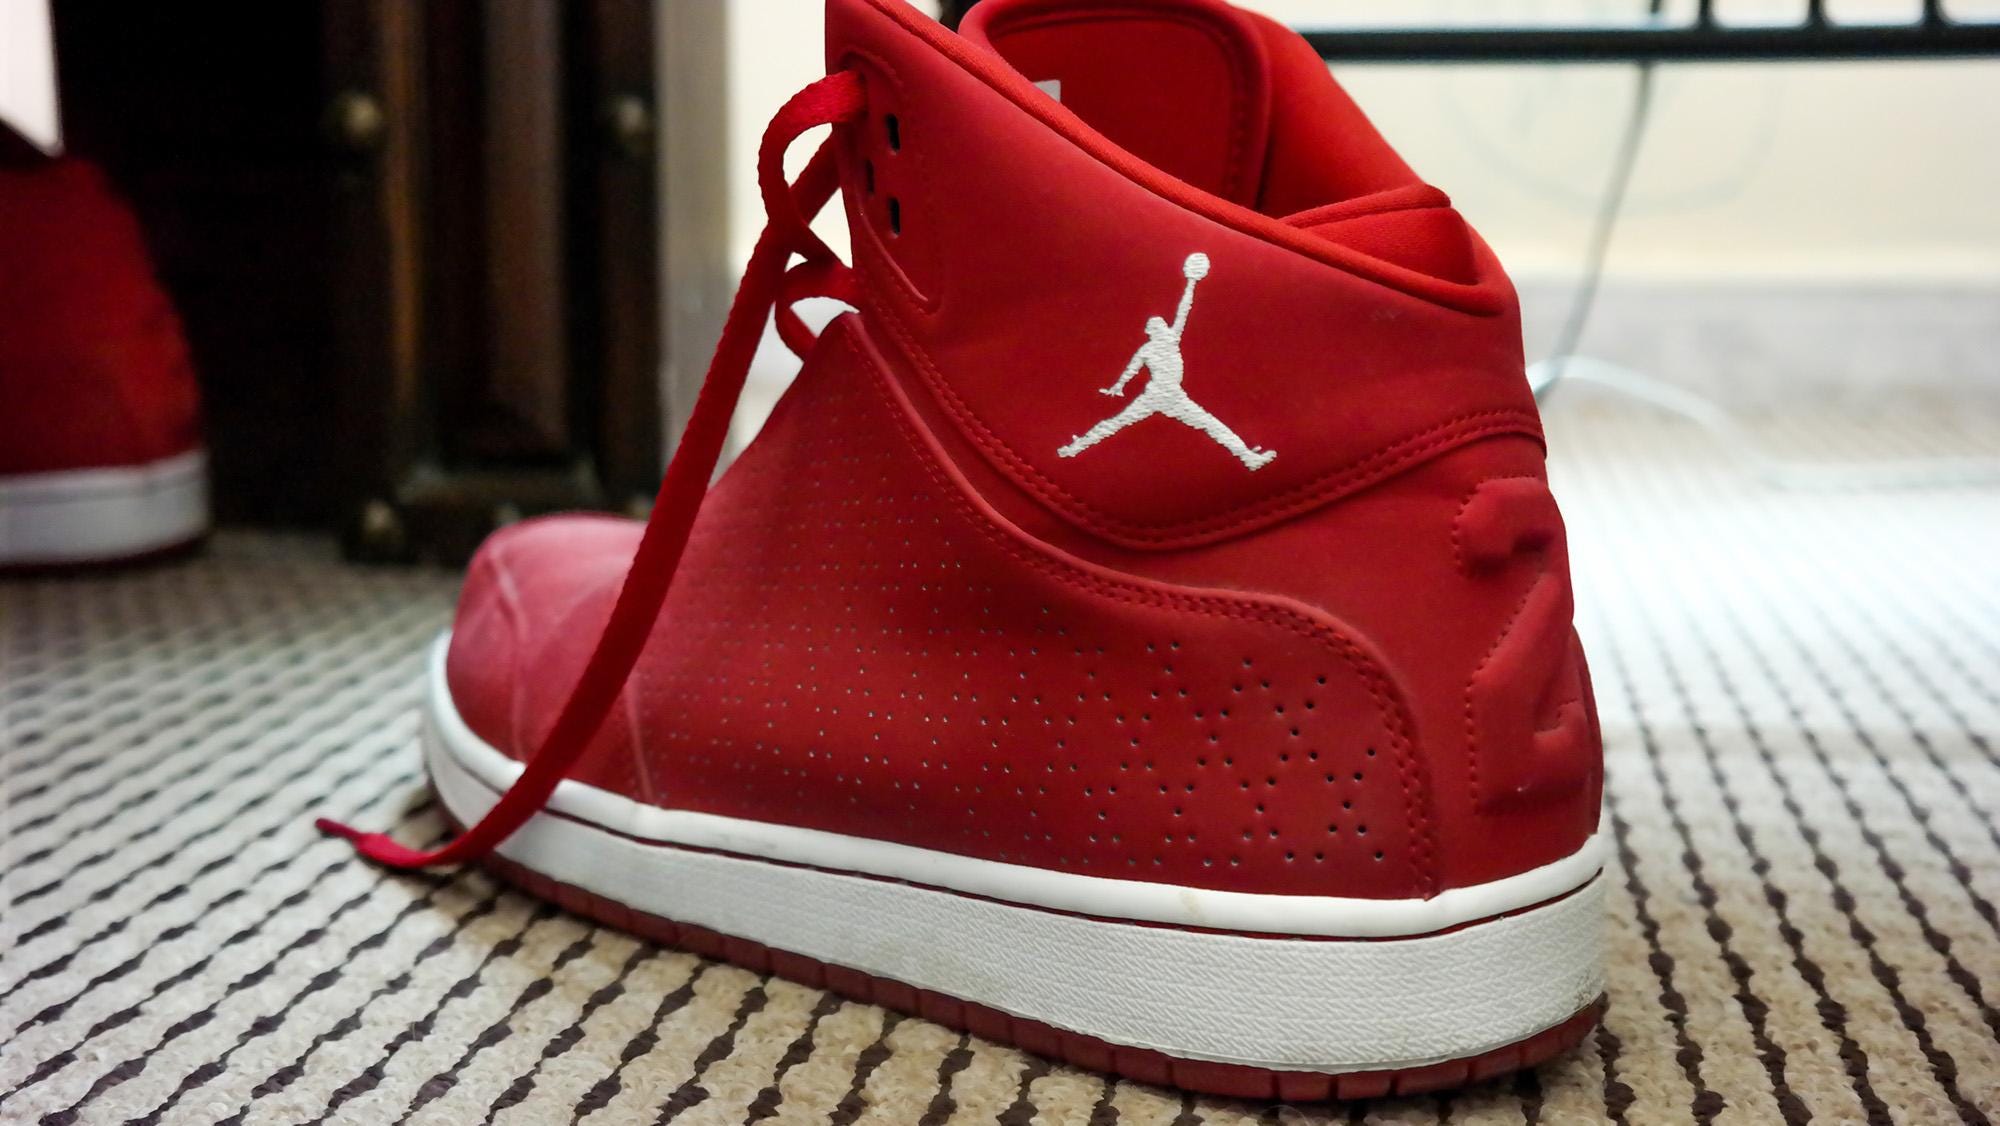 who makes jordan brand shoes